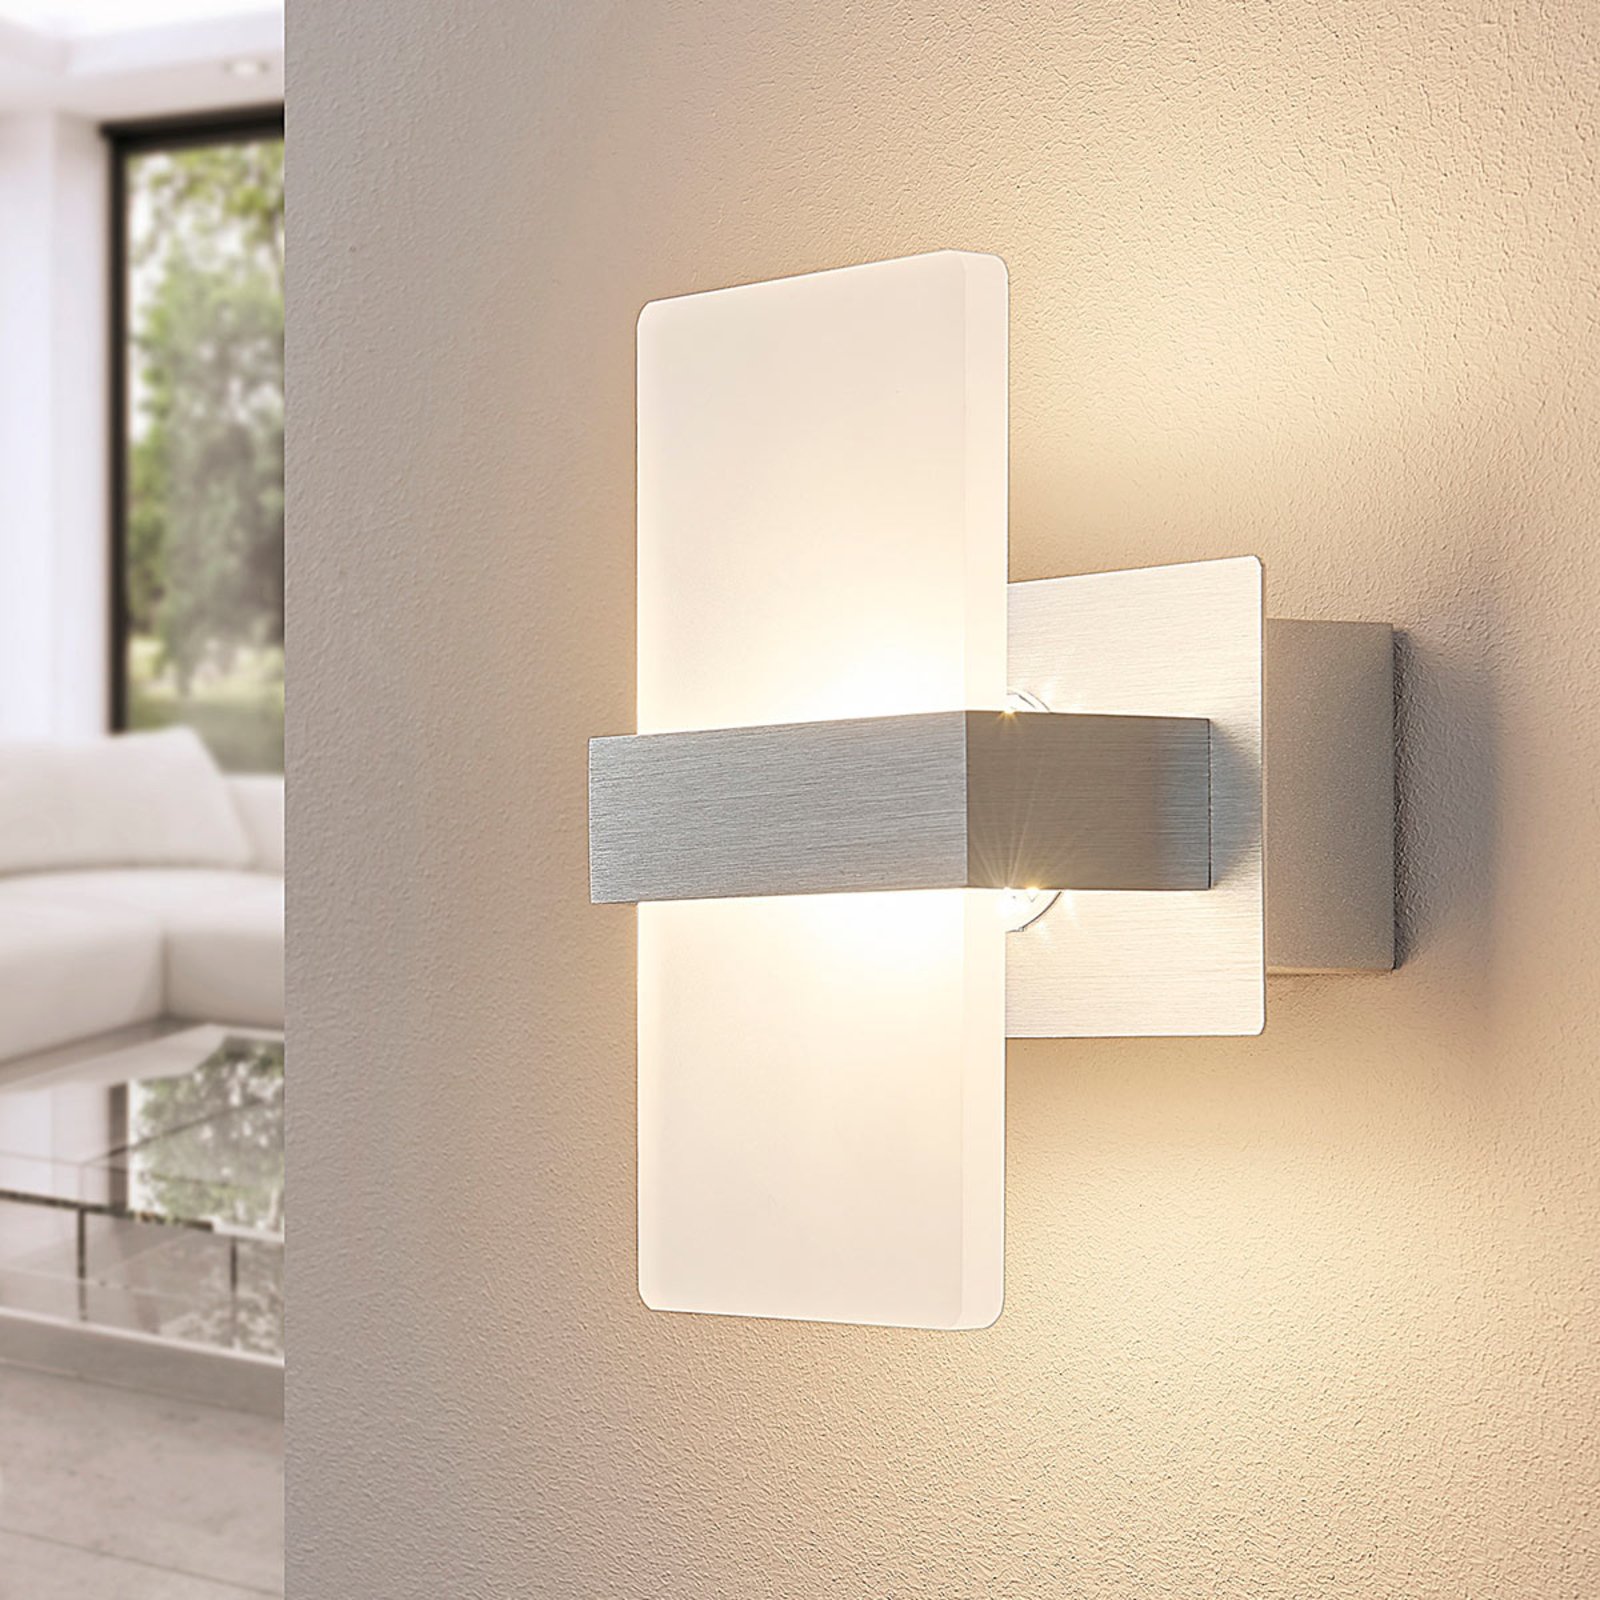 LED wall light Yorick with white plastic panel